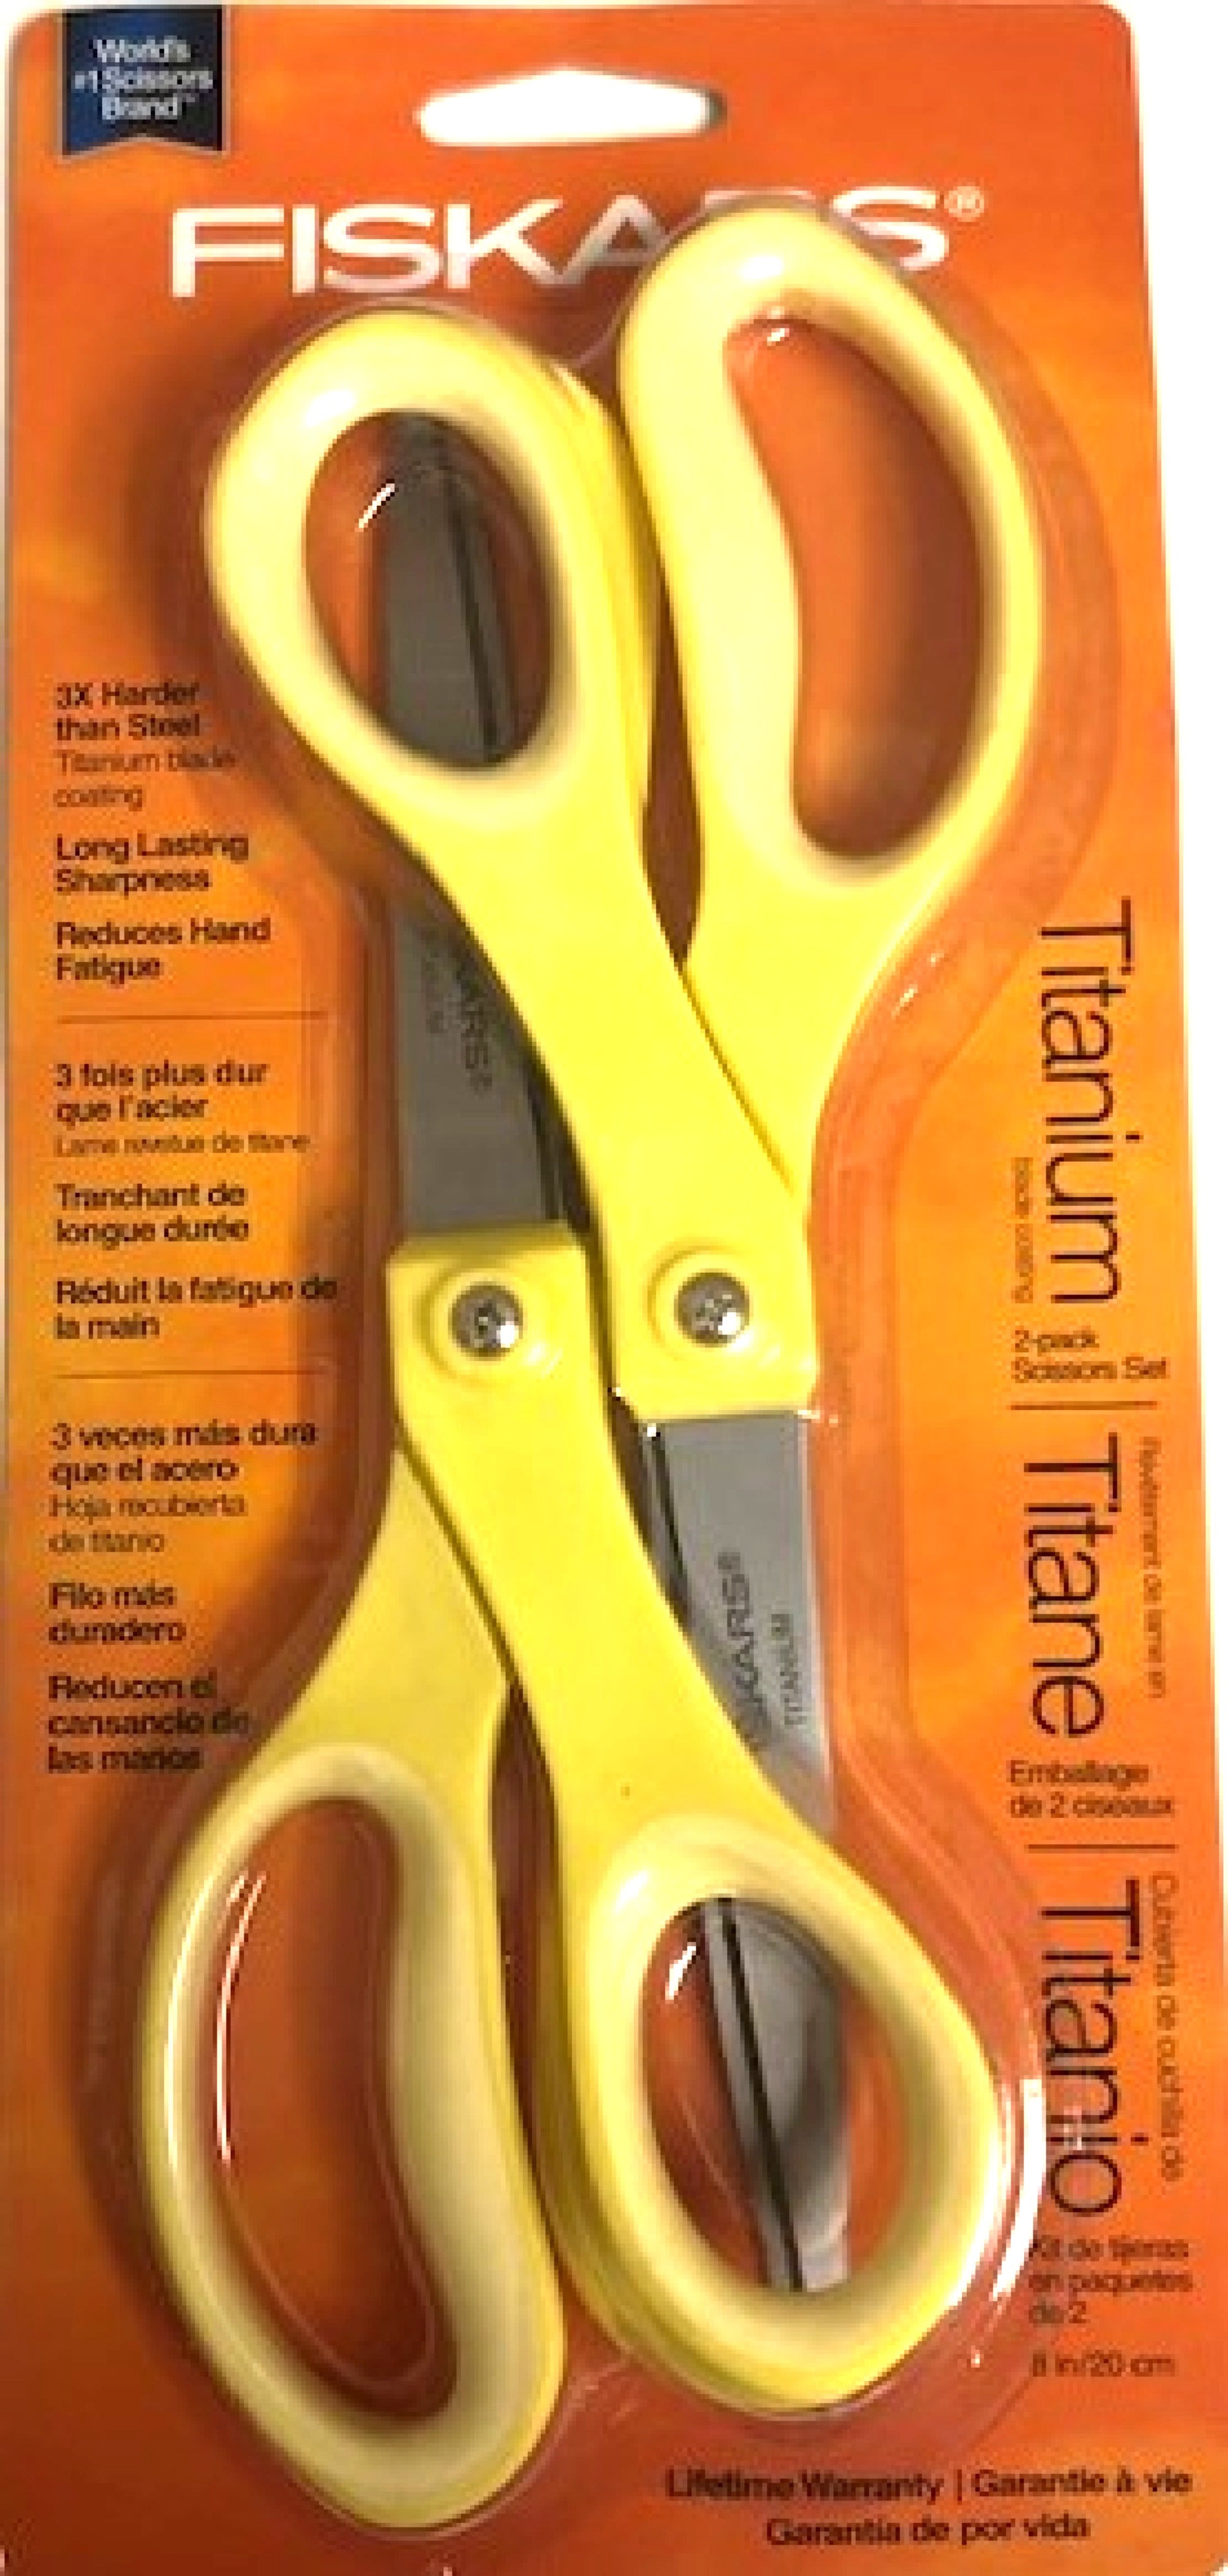 Fiskars 2 Pack Titanium Softgrip Scissors, Gray, 8 inch 